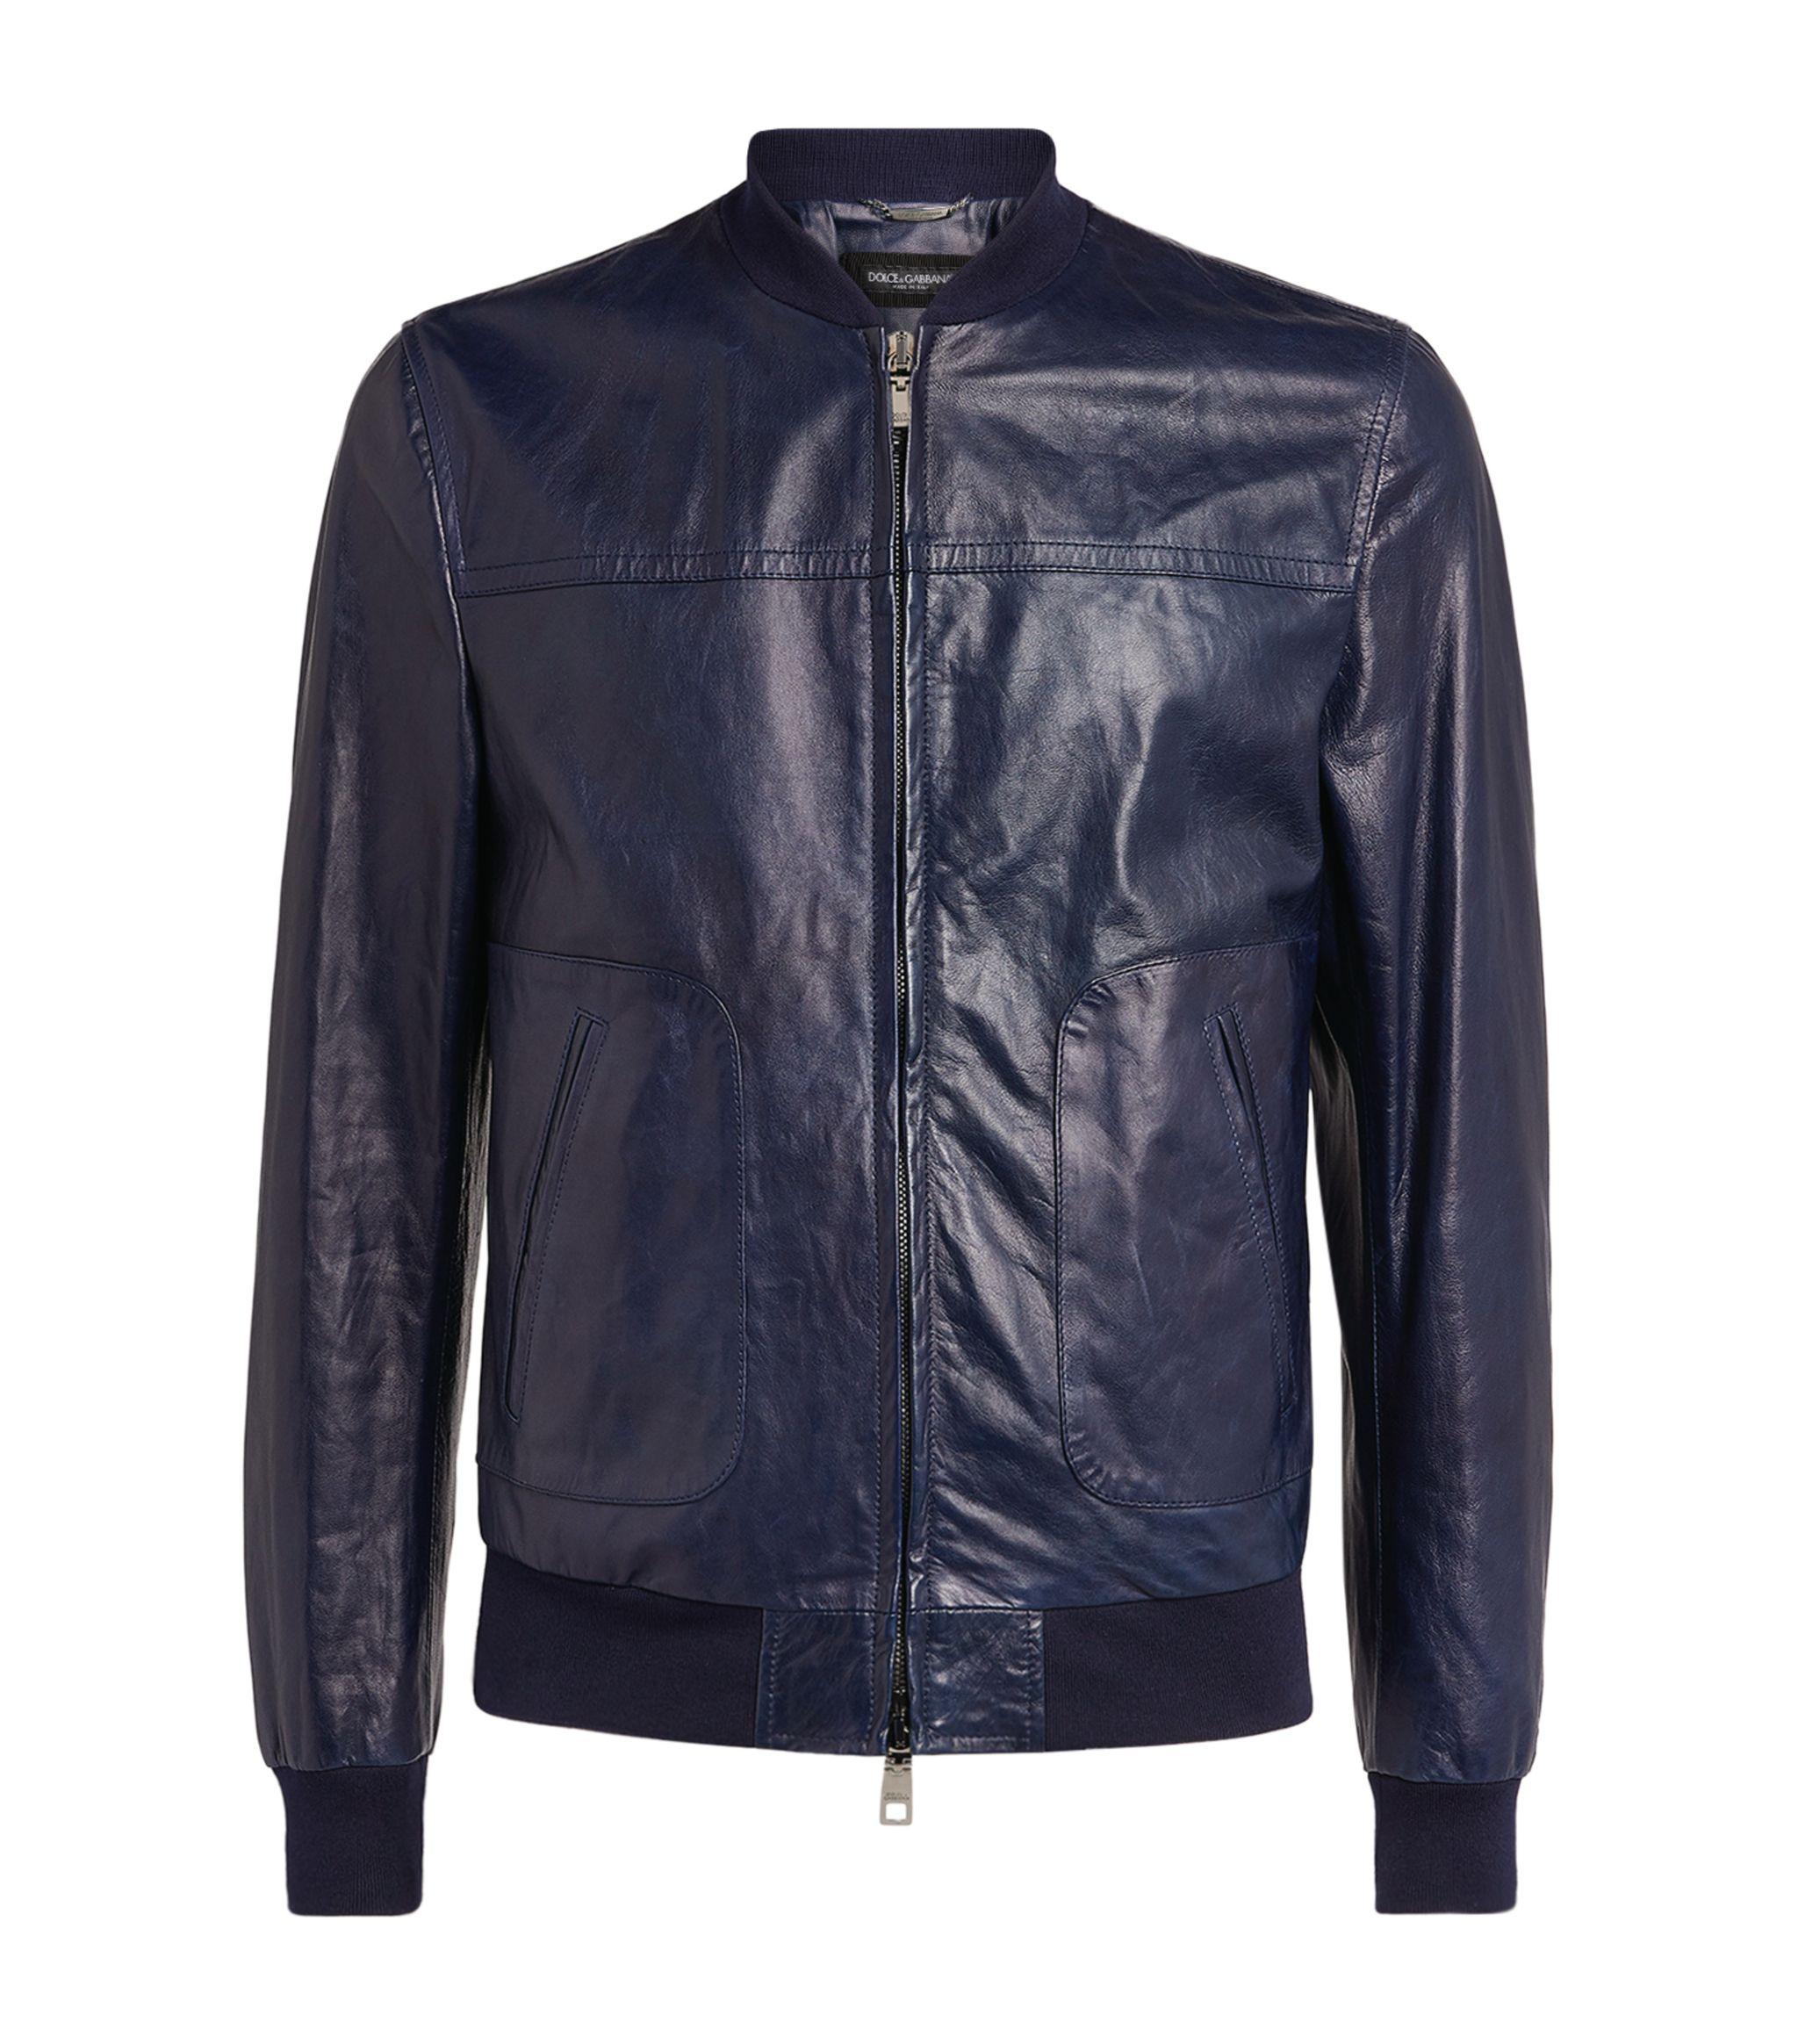 Dolce & Gabbana Leather Bomber Jacket in Blue for Men - Lyst